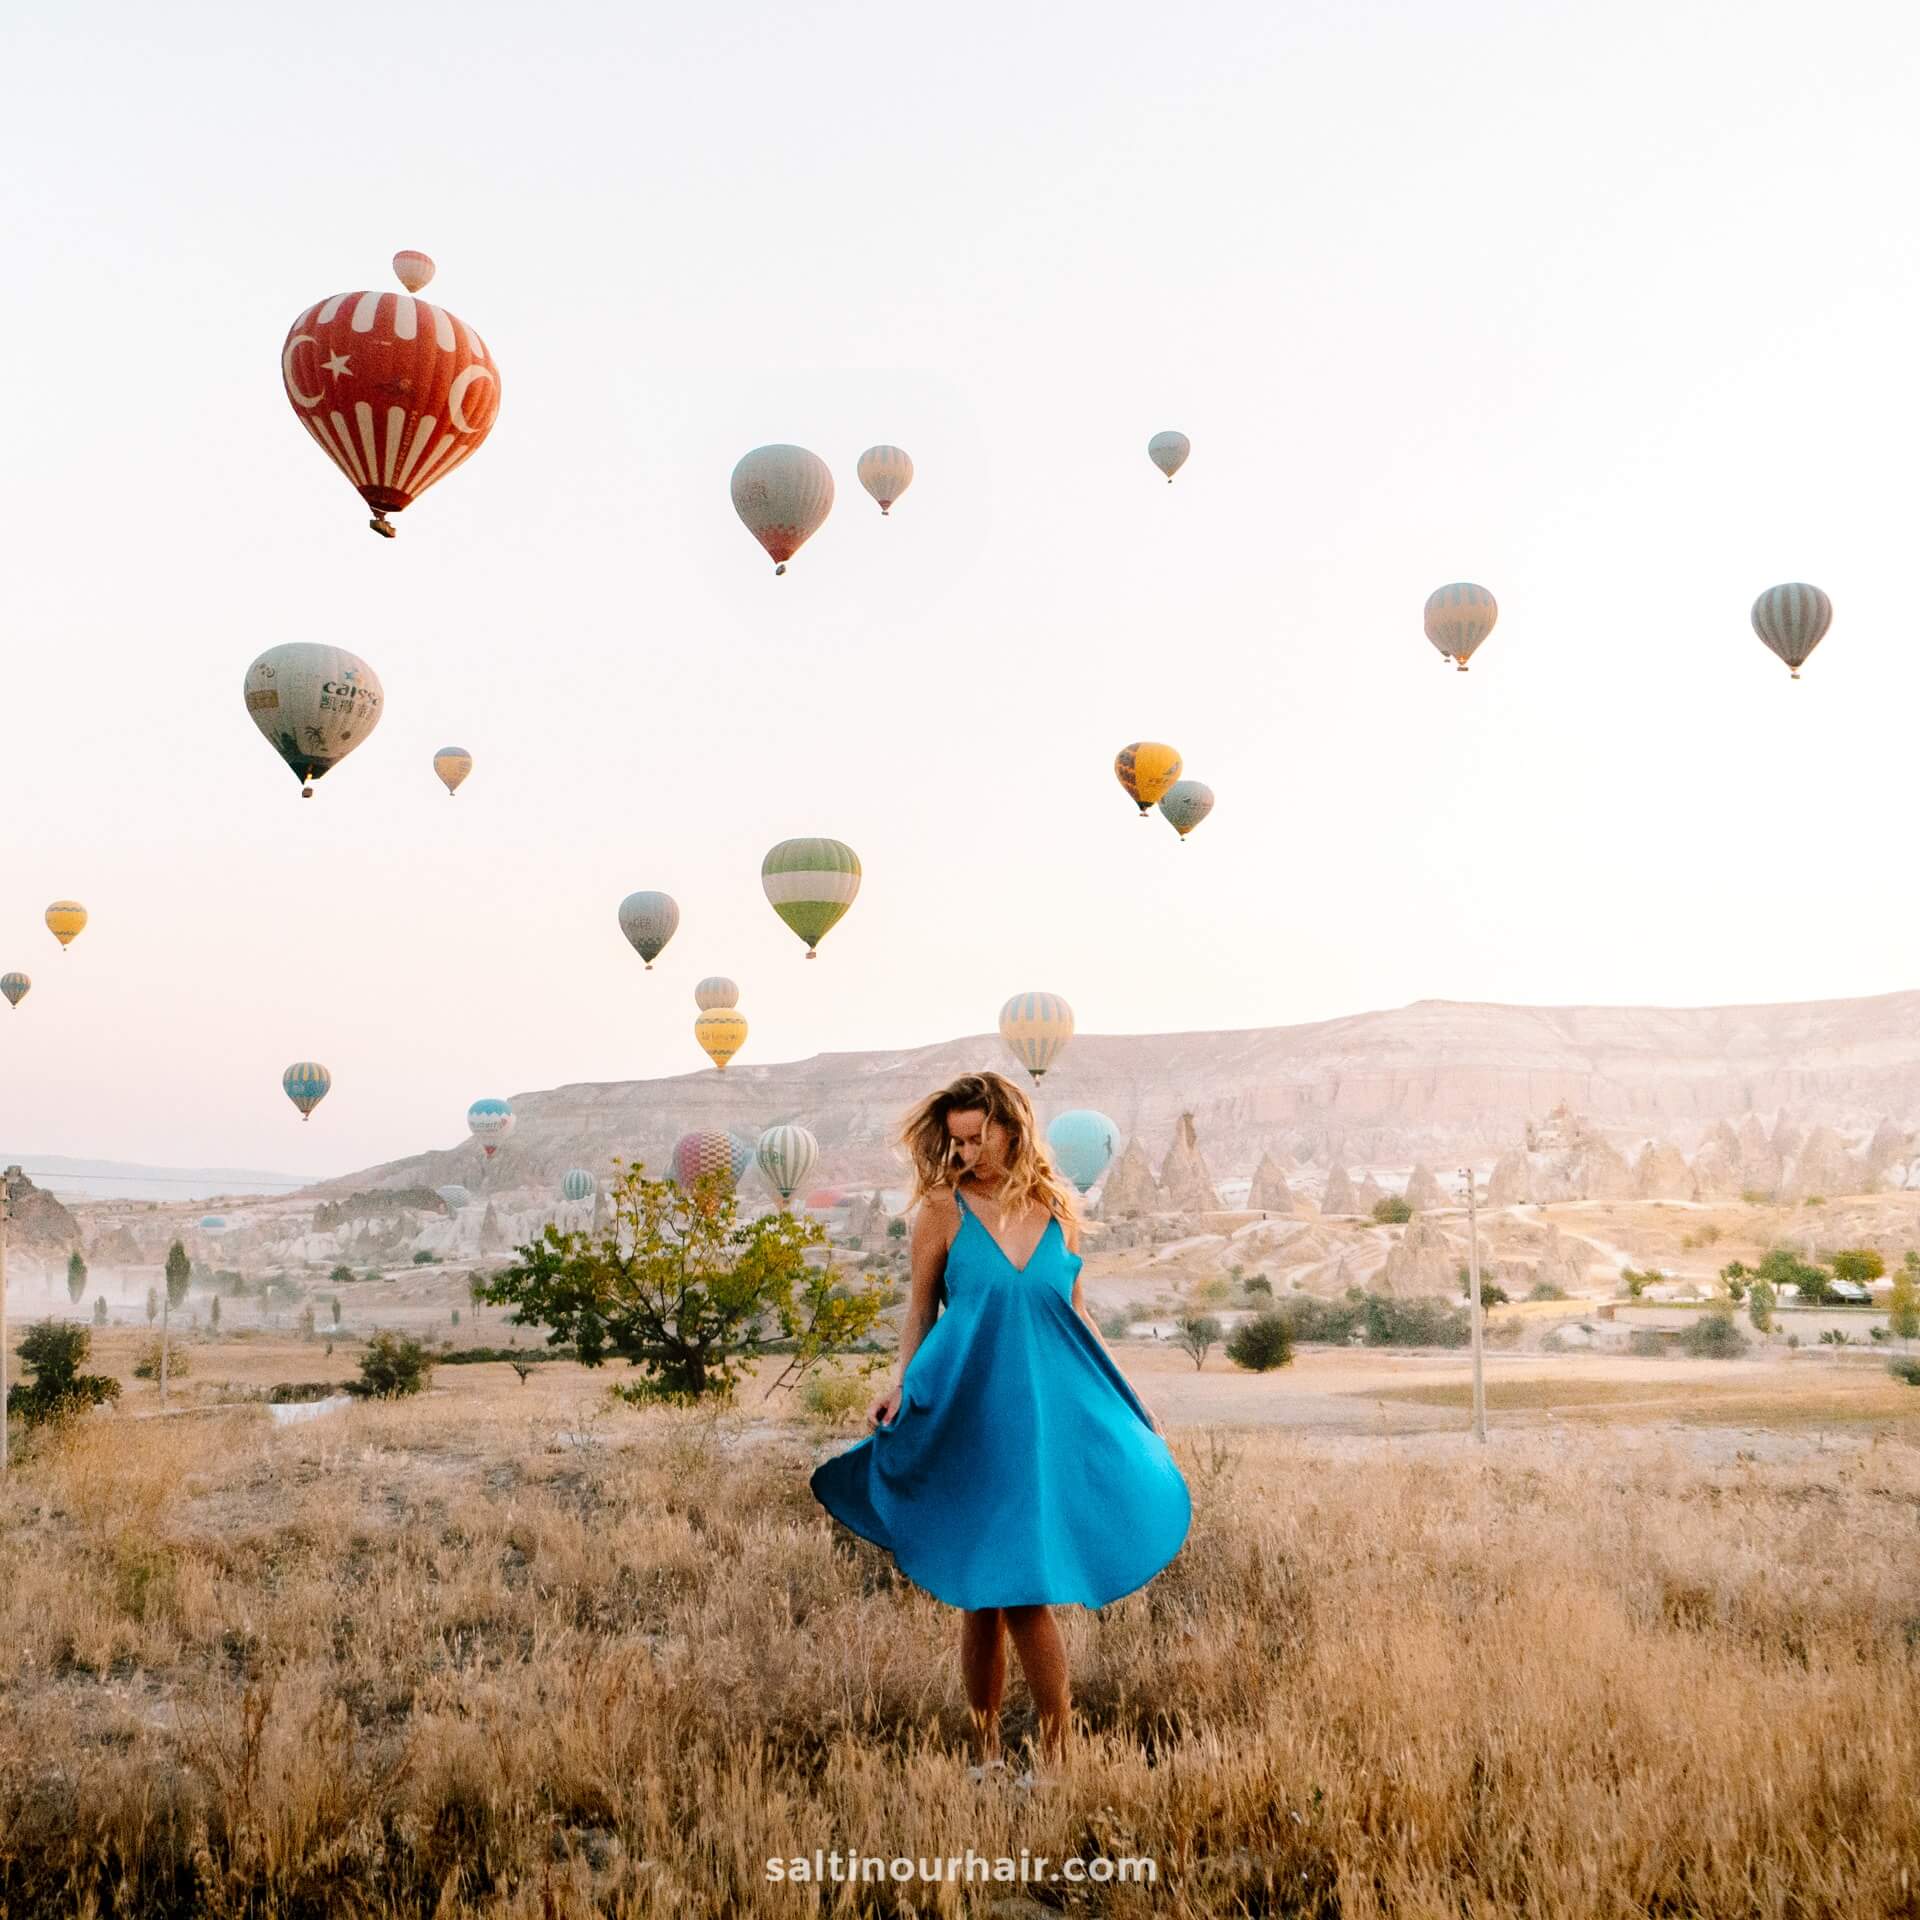 dreigen Isoleren climax Best Things To Do in Cappadocia: Hot Air Balloons of Turkey